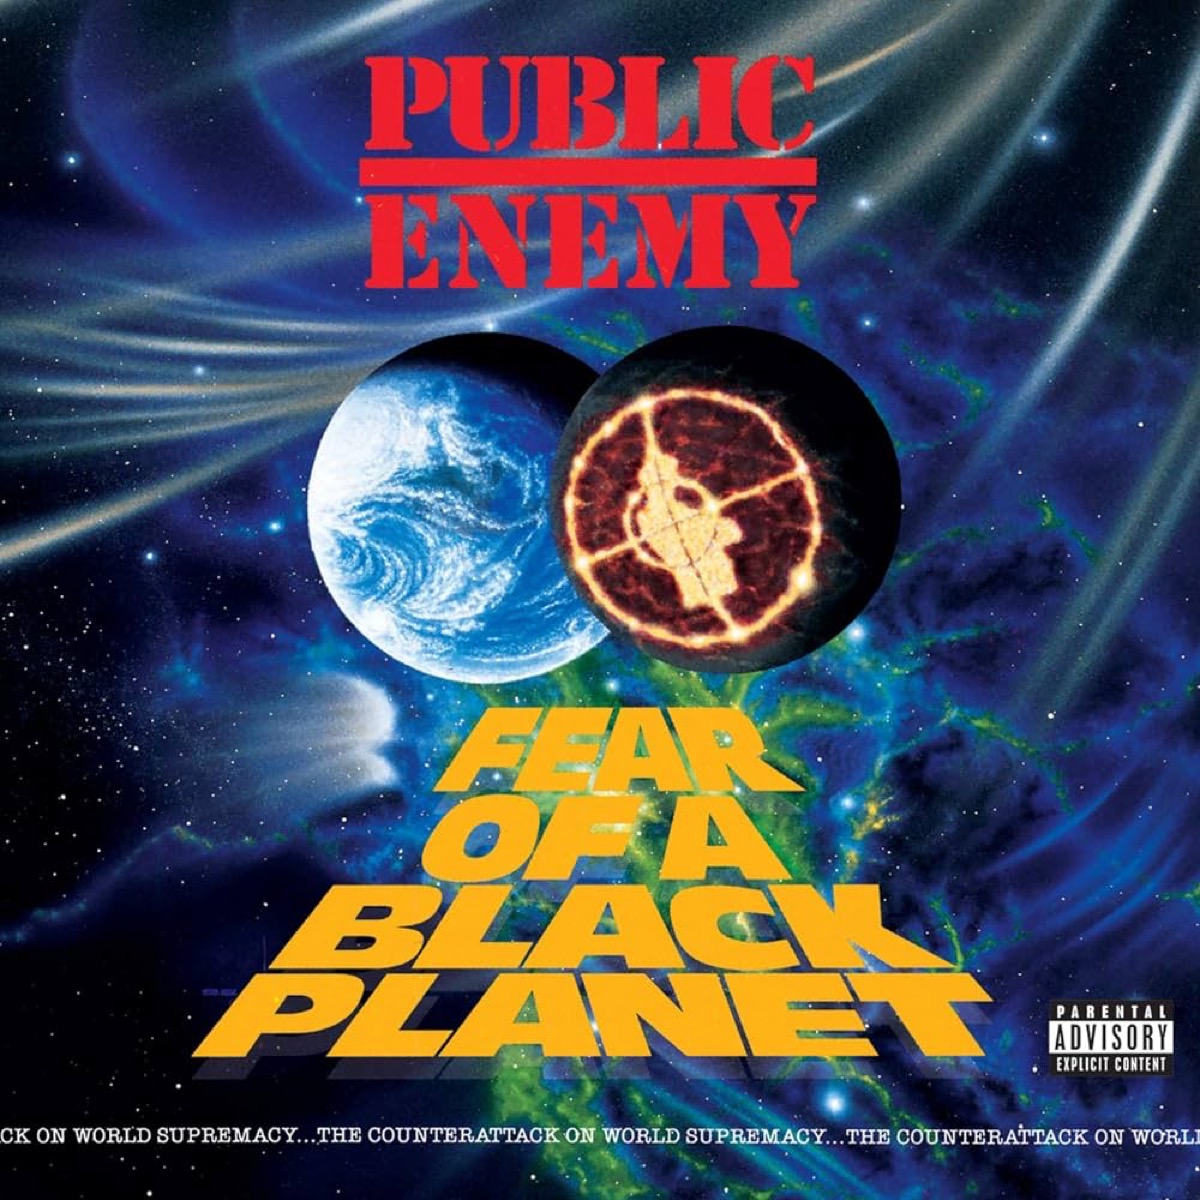 "Fear of a Black Planet" by Public Enemy album cover